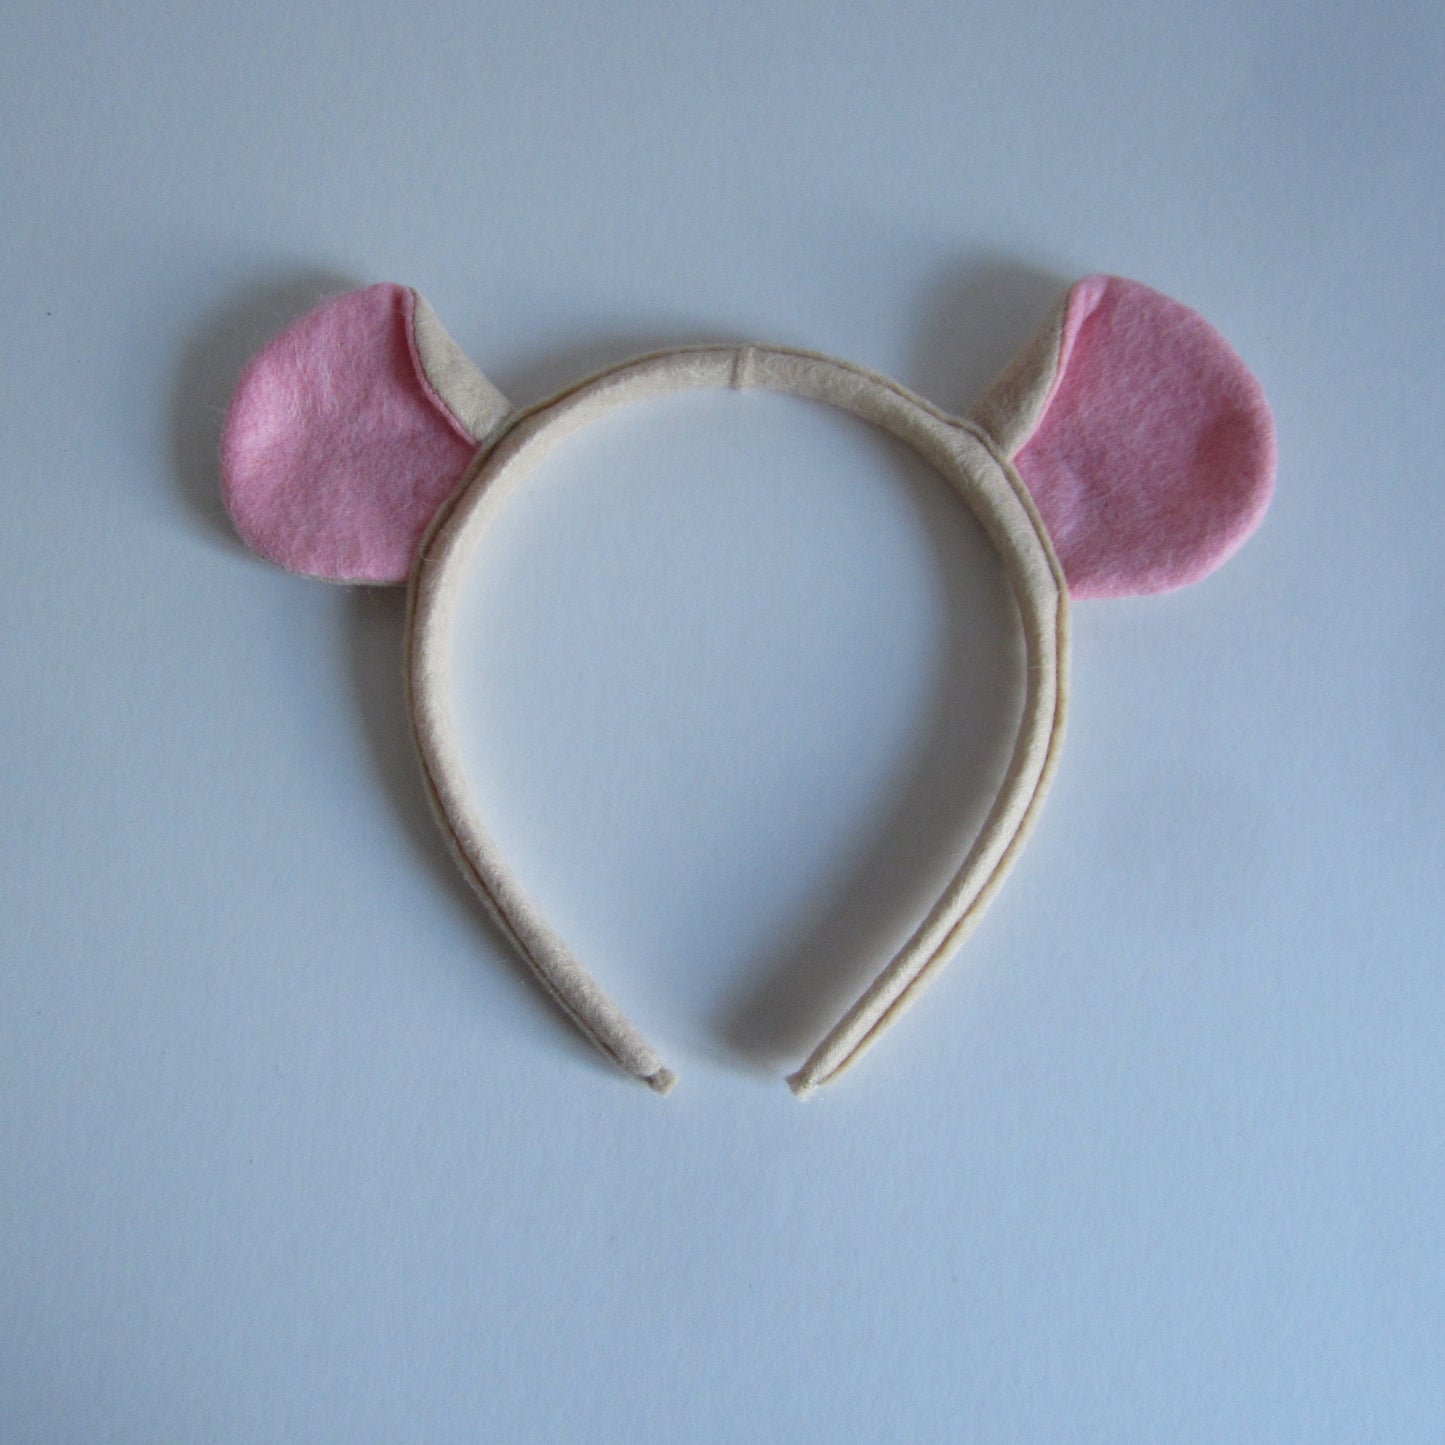 Mouse Eared Hairband Made of Fawn Coloured Felt